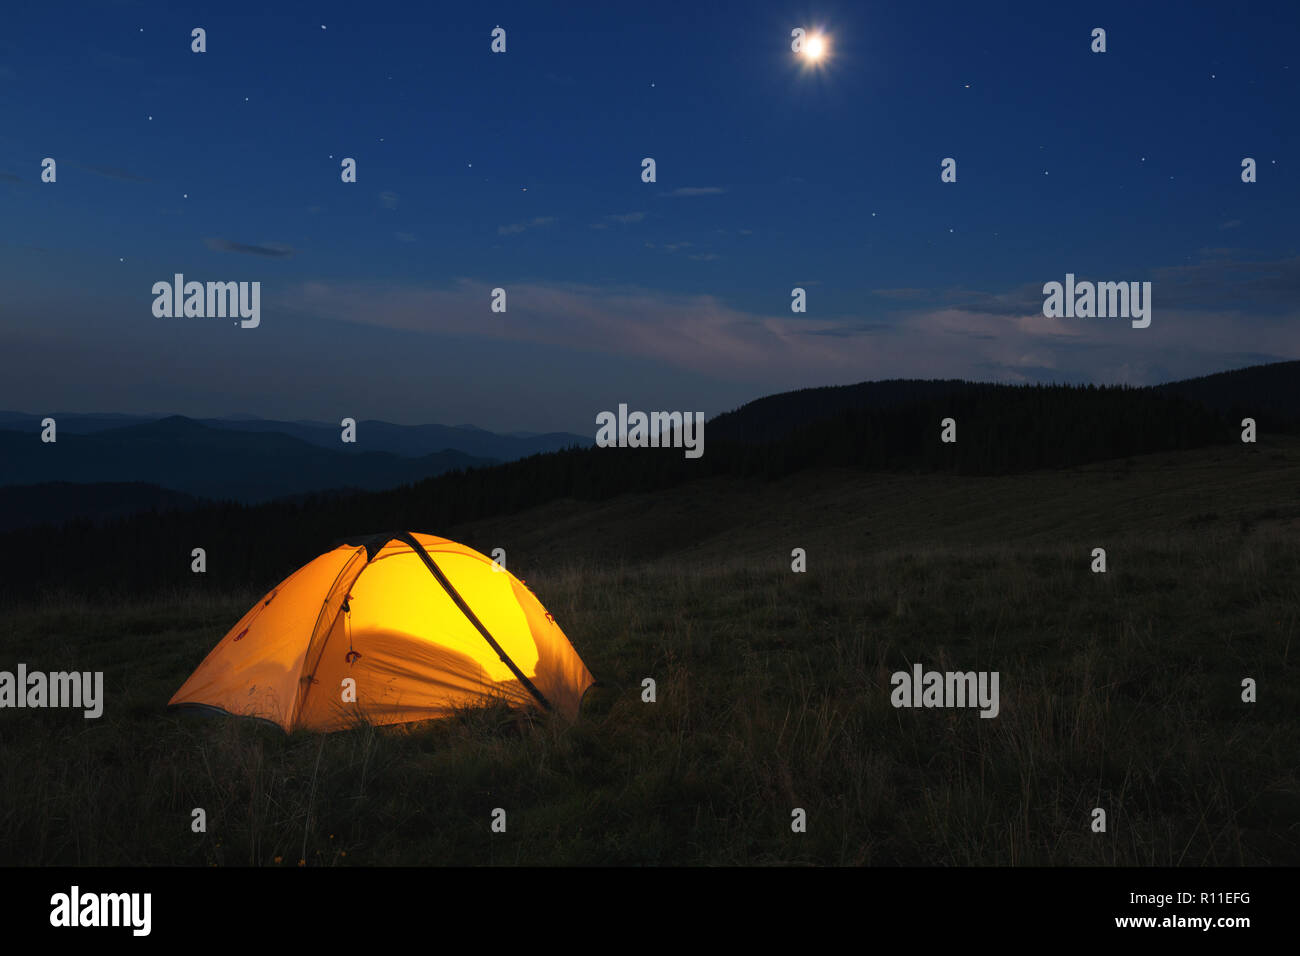 Illuminated orange tent at top of mountain at night Stock Photo